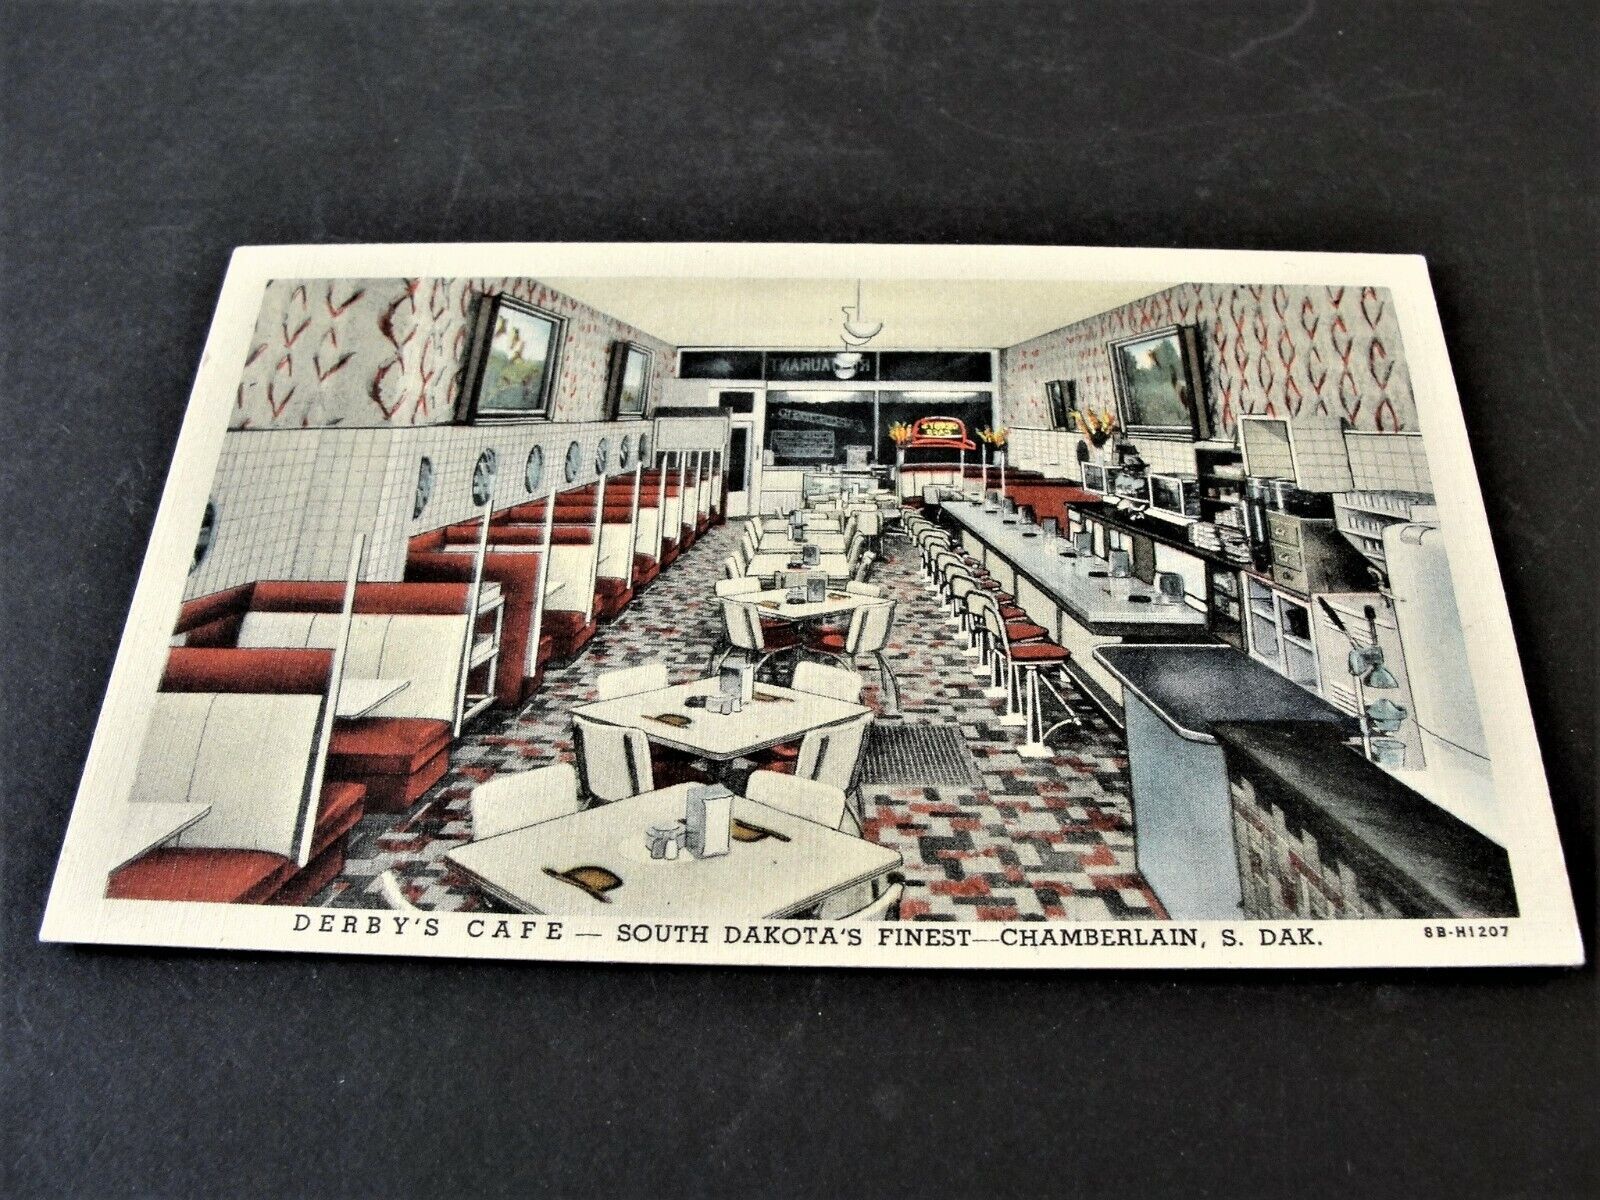  Derby's Cafe, South Dakota's Finest, Chamberlain, S.Dak. - Unposted Postcard. 